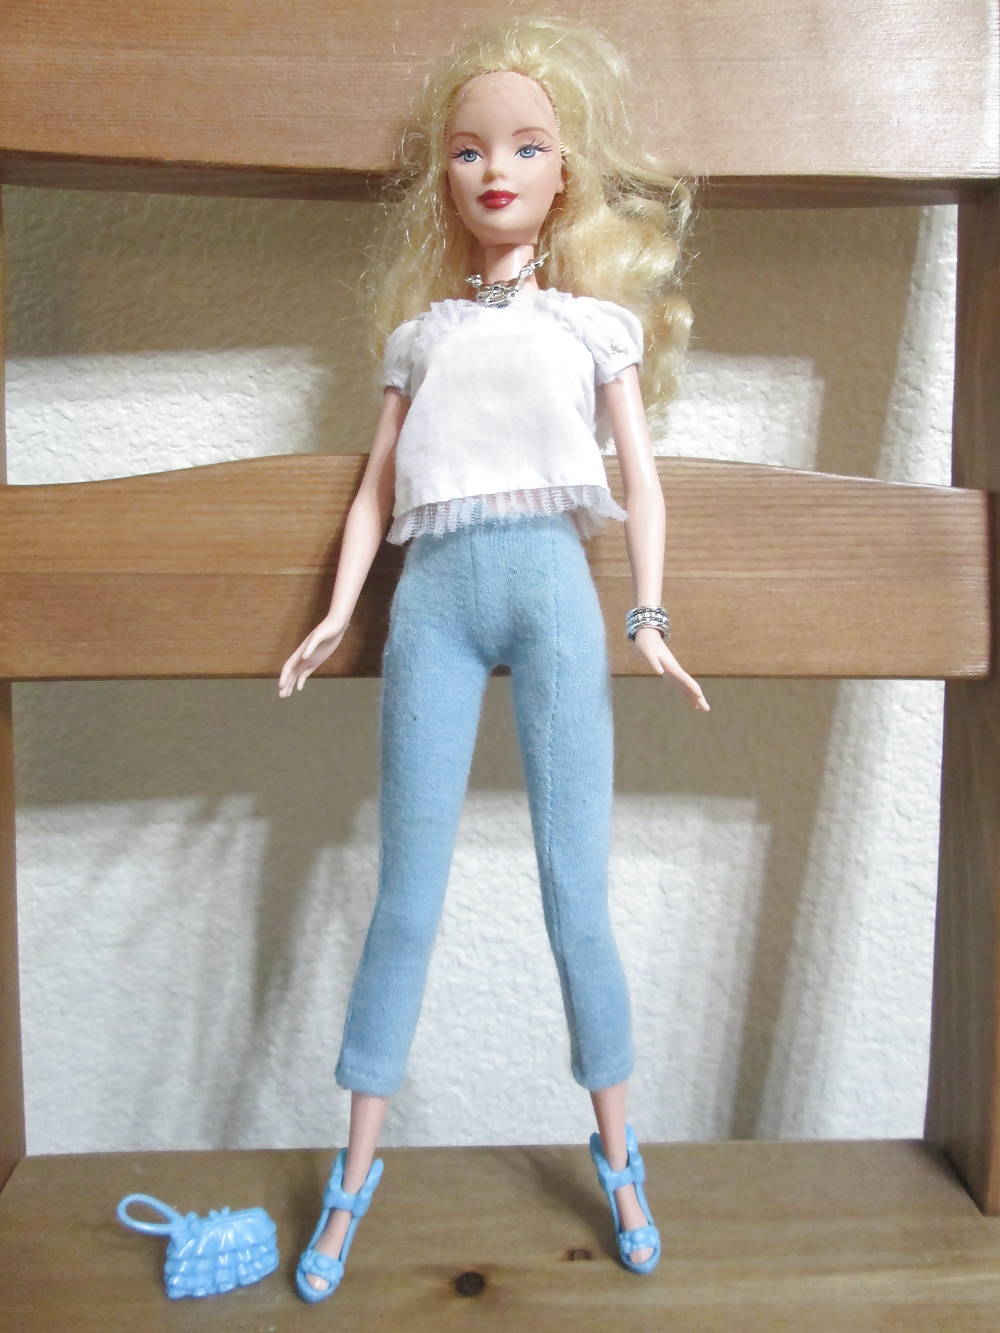 Classic blond Barbie, softcore #40360101